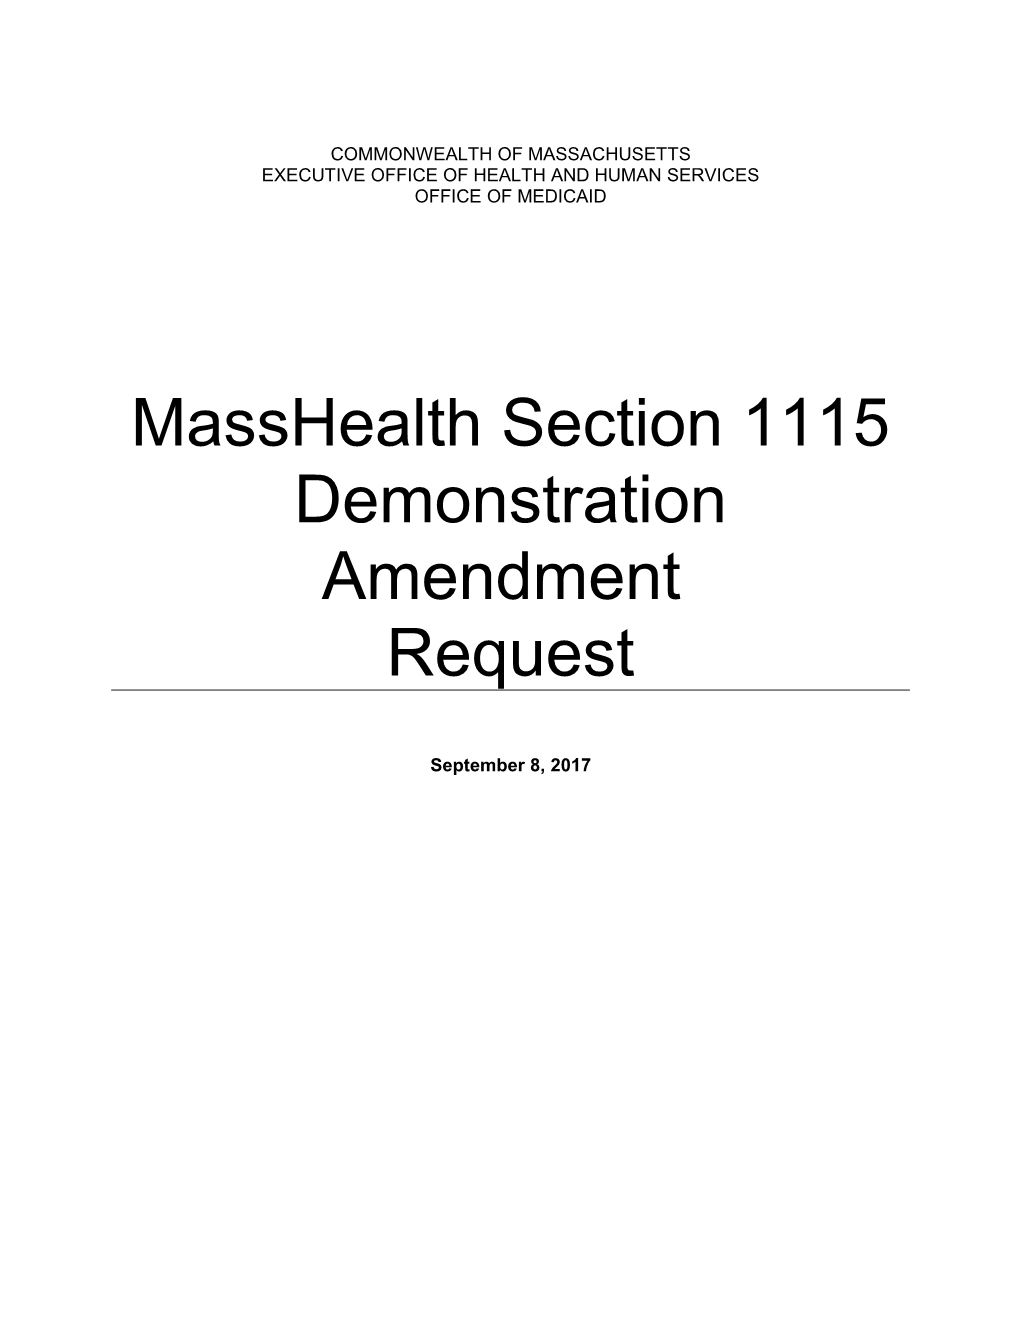 Masshealth Section 1115 Demonstration Amendment Request